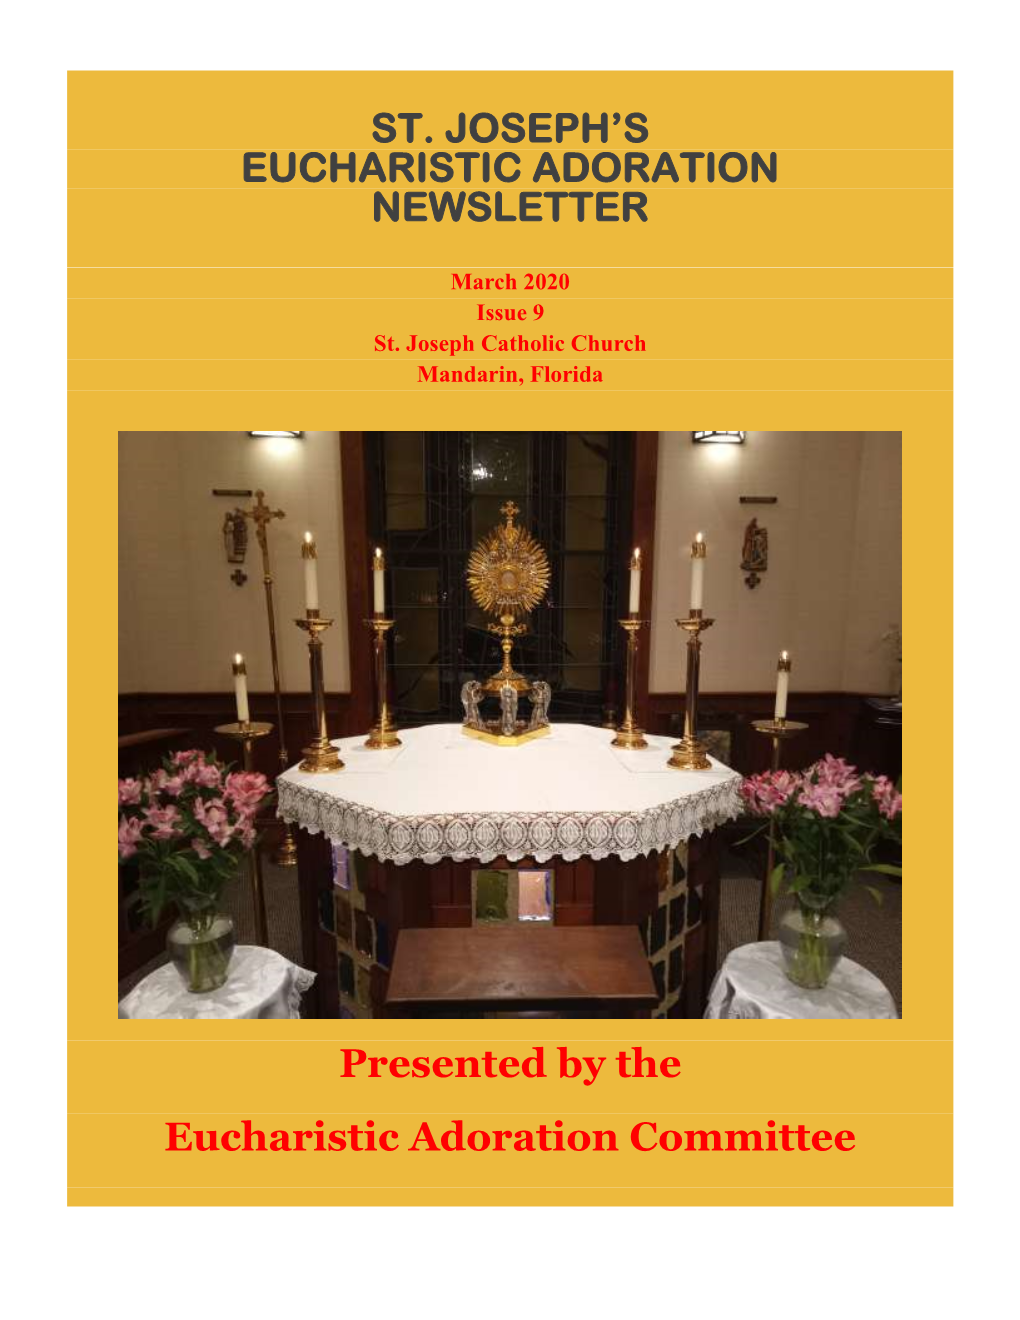 March 2020 Eucharistic Adoration Newsletter